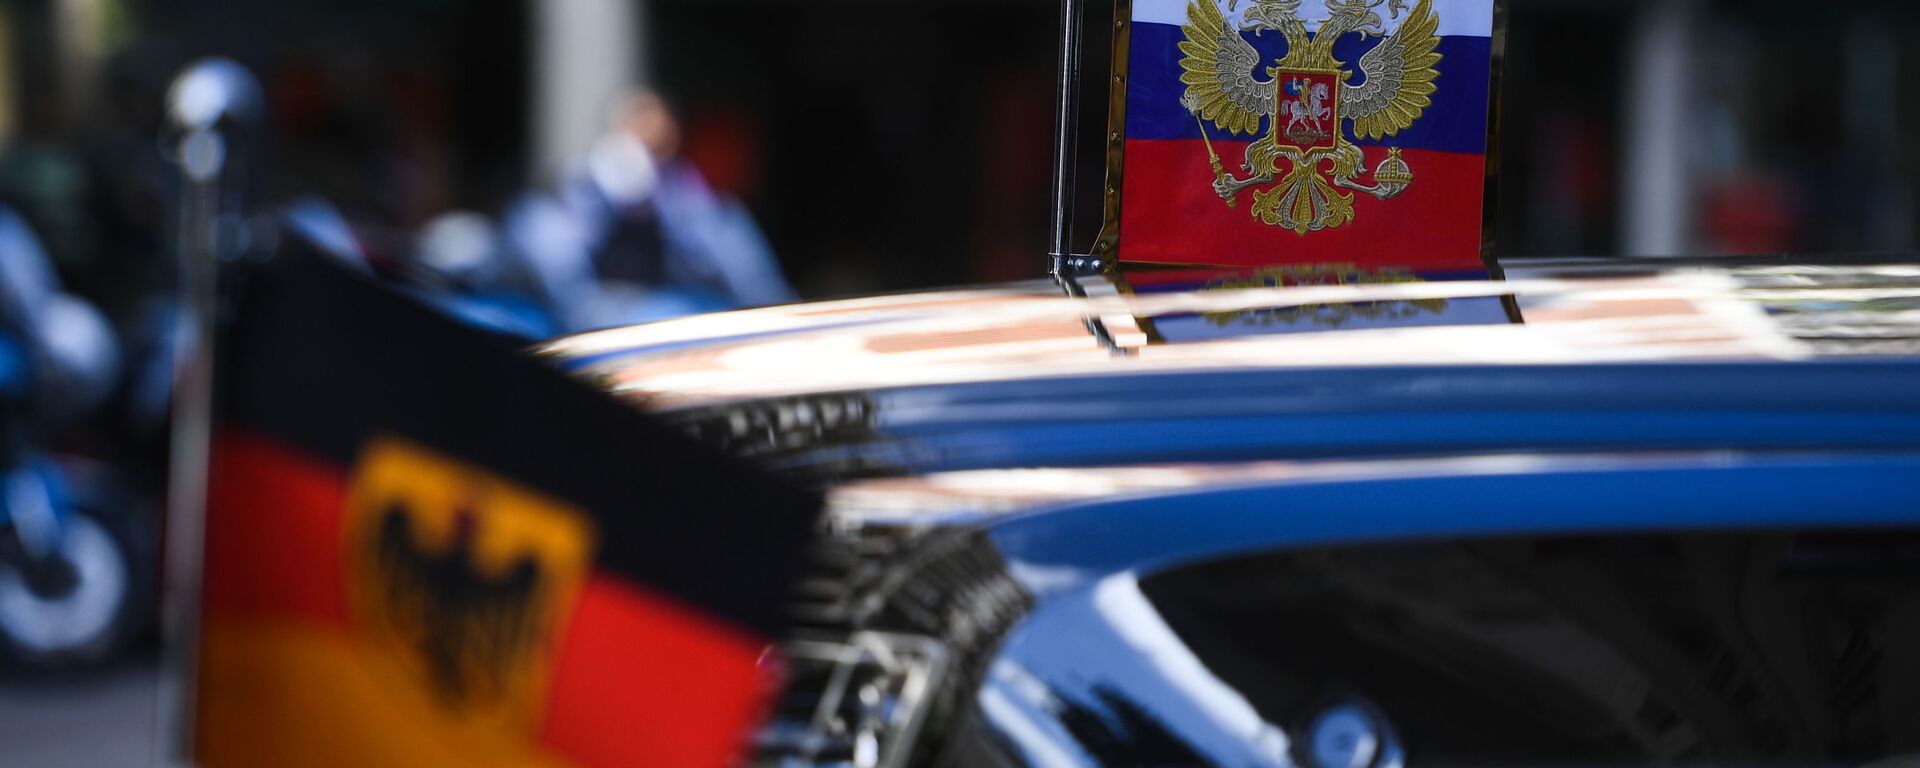 Руска и немачка застава на аутомобилу председника Русија - Sputnik Србија, 1920, 26.12.2021